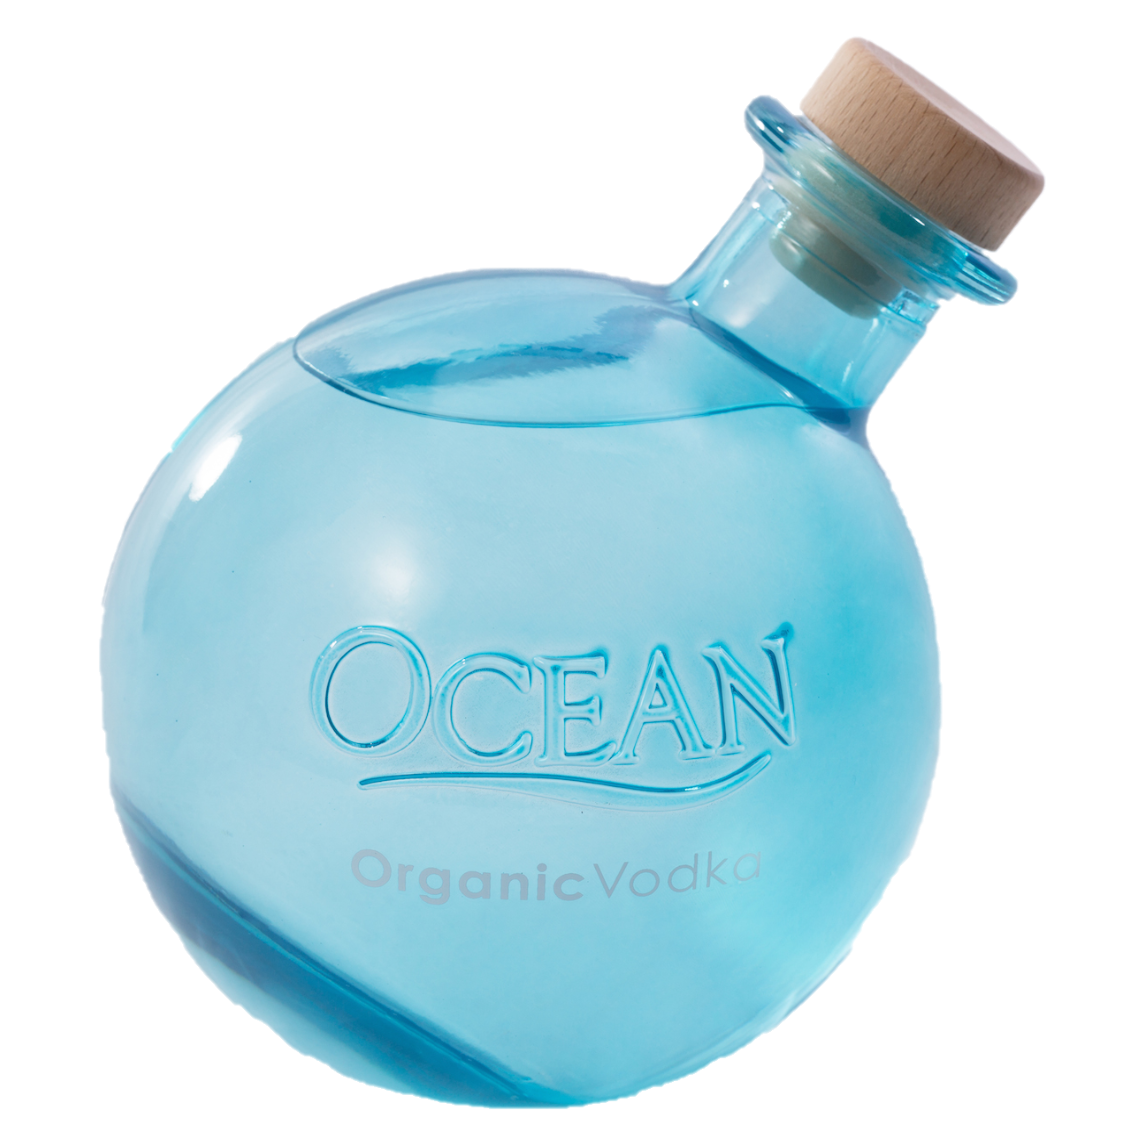 Ocean Vodka 750ml Colonial Spirits